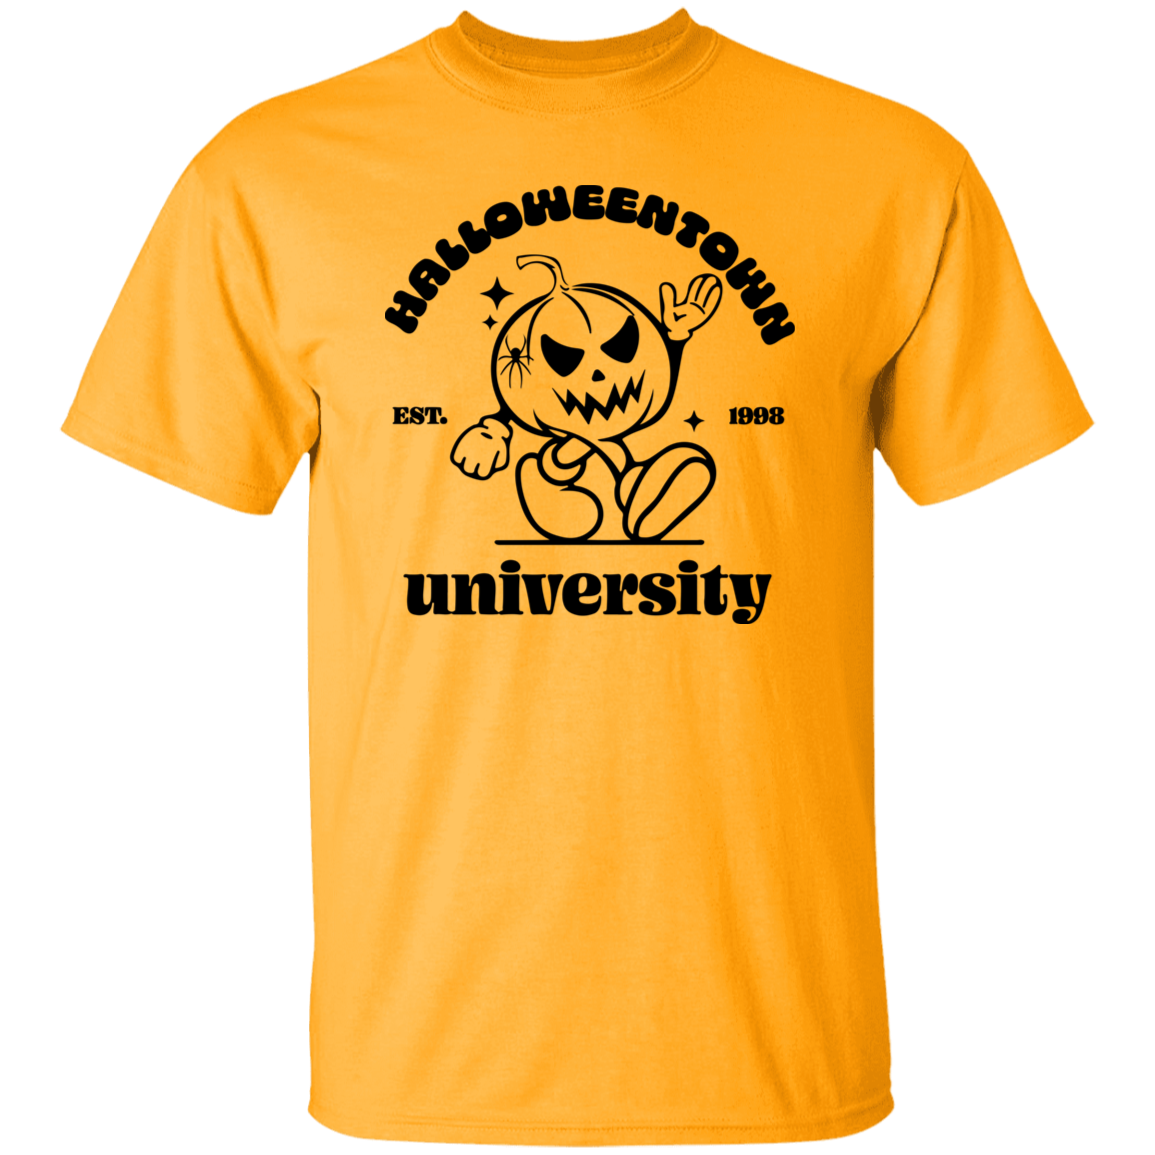 HalloweenTown University (Est. 1998)- Unisex T-Shirt